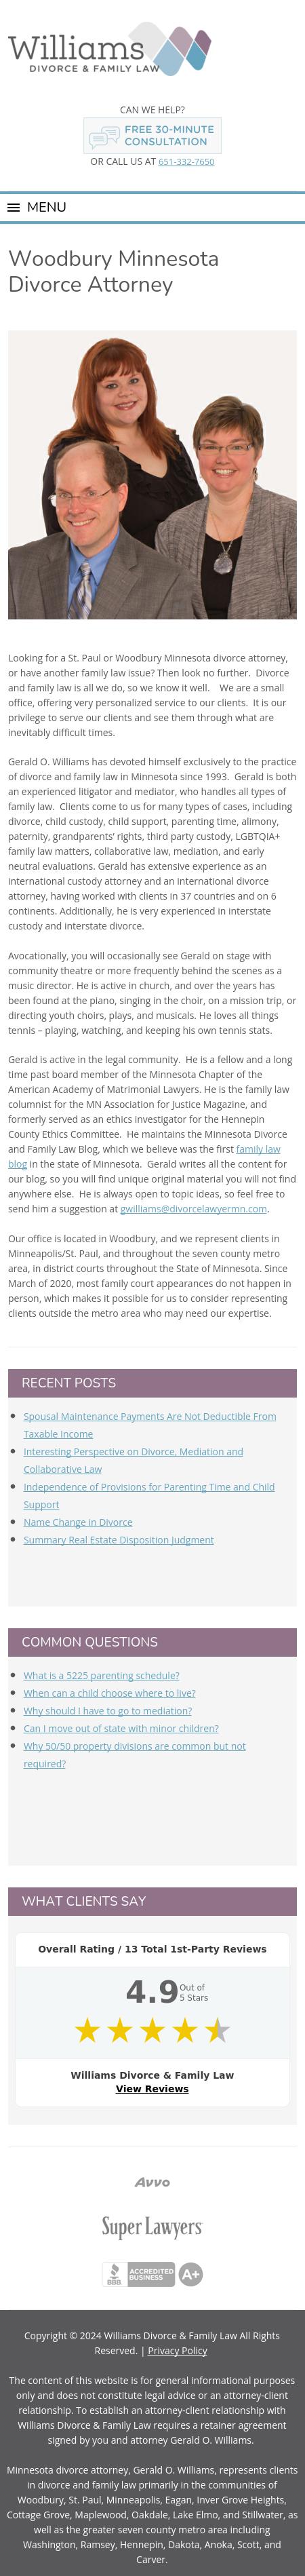 Williams Divorce & Family Law - Woodbury MN Lawyers